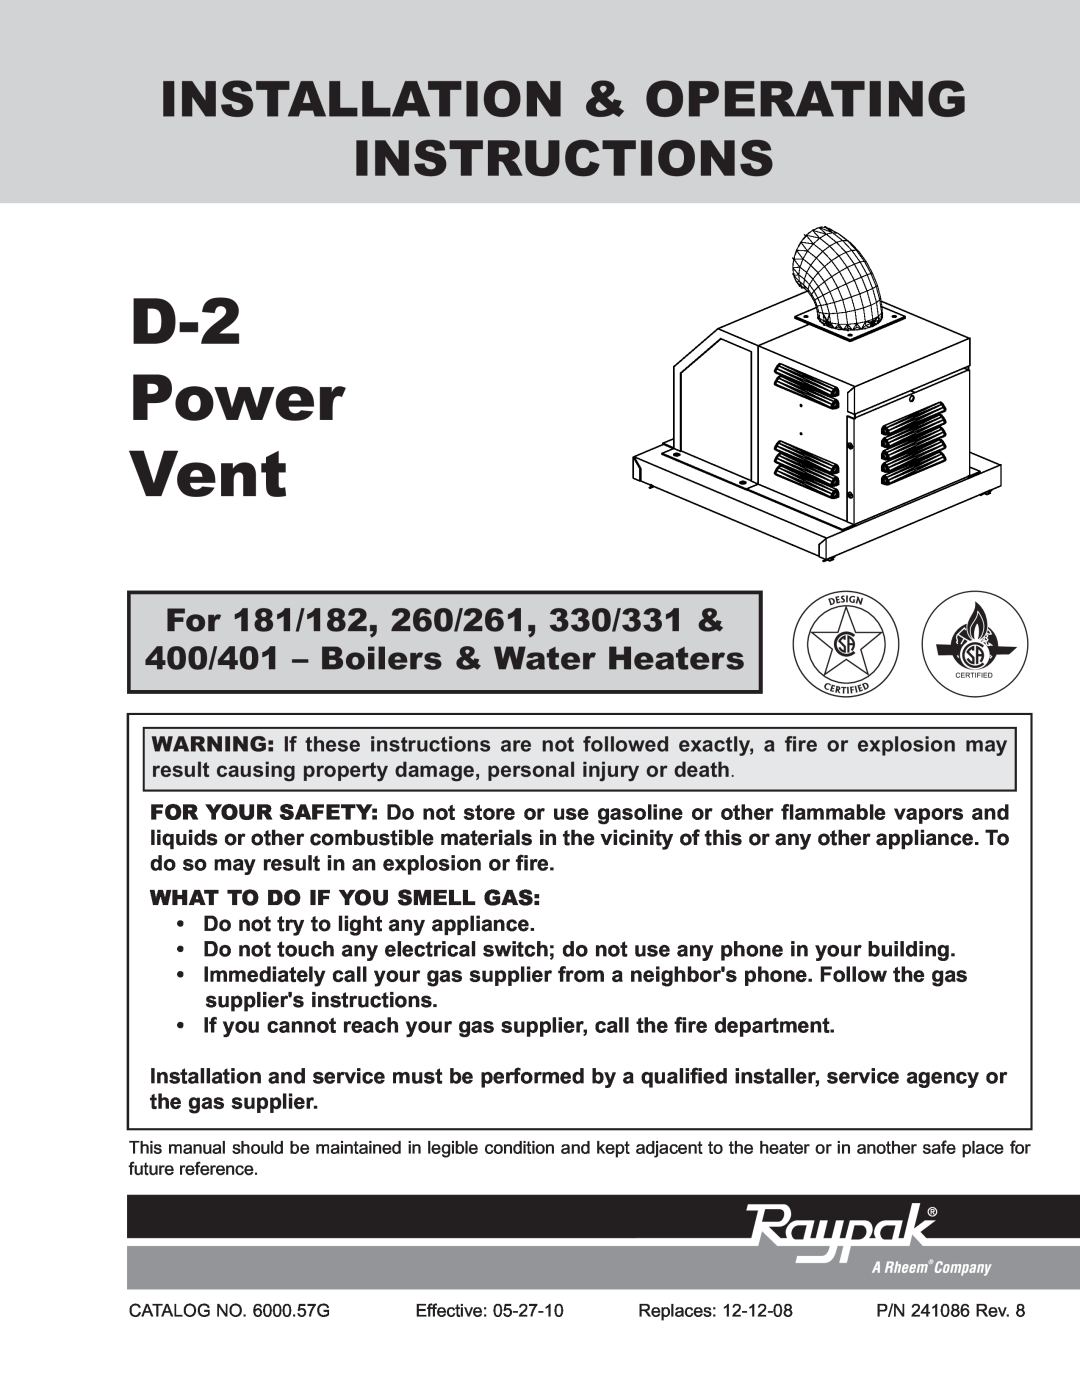 Raypak manual For 181/182, 260/261, 330/331 400/401 - Boilers & Water Heaters, D-2 Power Vent 